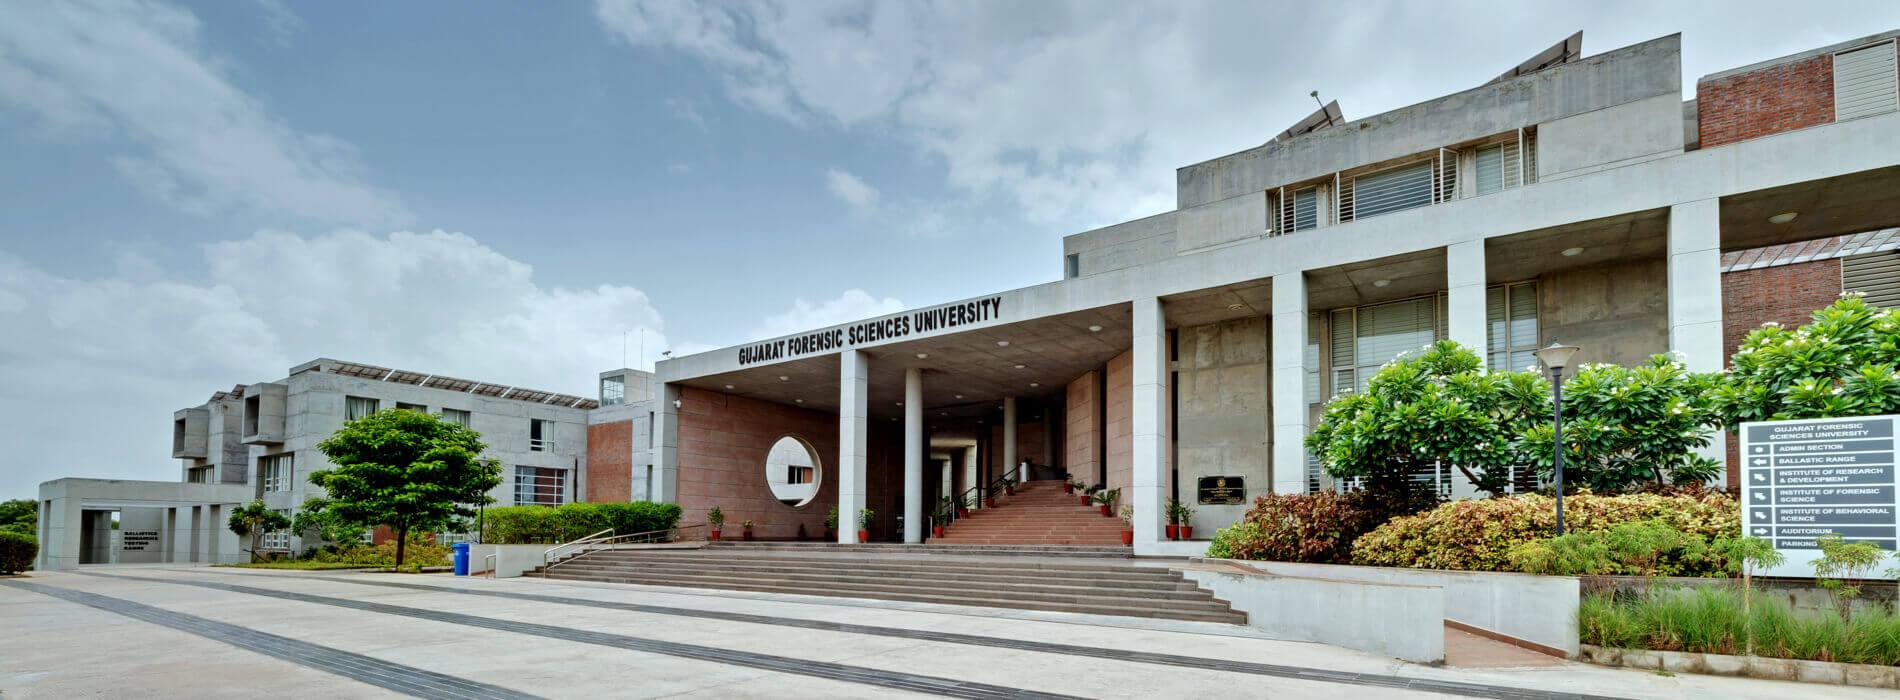 GFSU (Gujarat Forensic Sciences University) Image